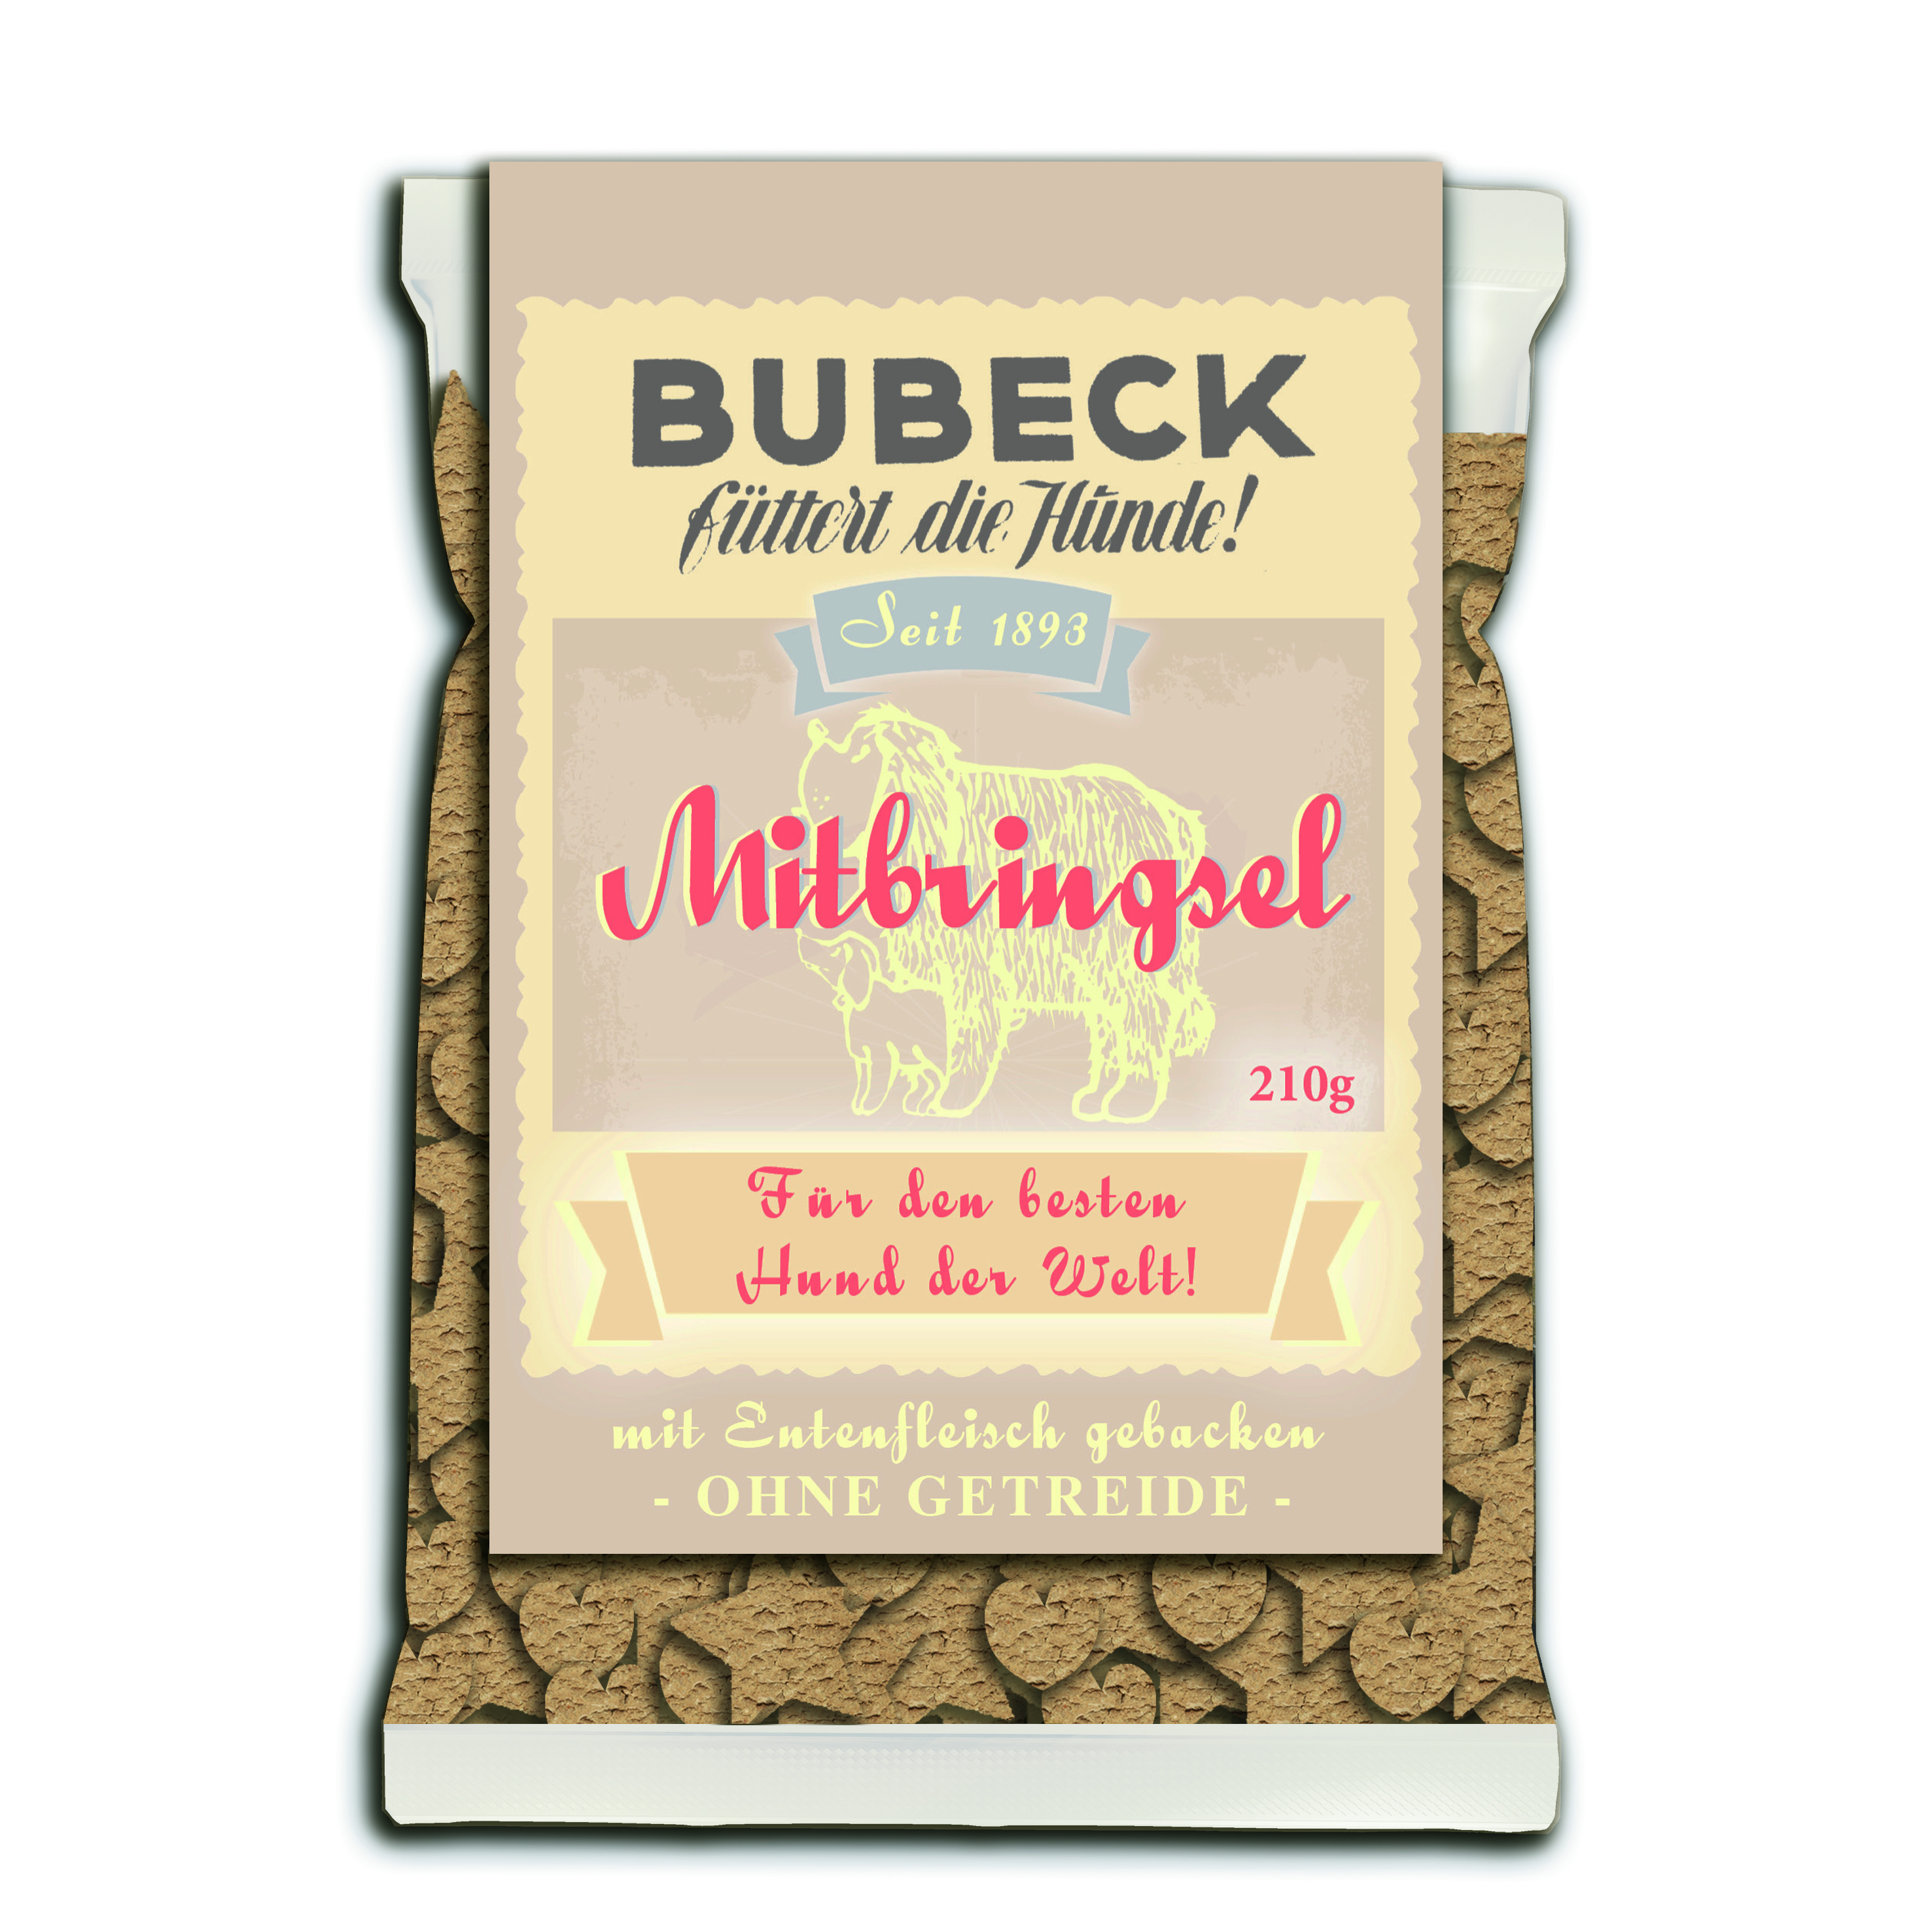 Bubeck, Mitbringsel "Classic Edition" 210g